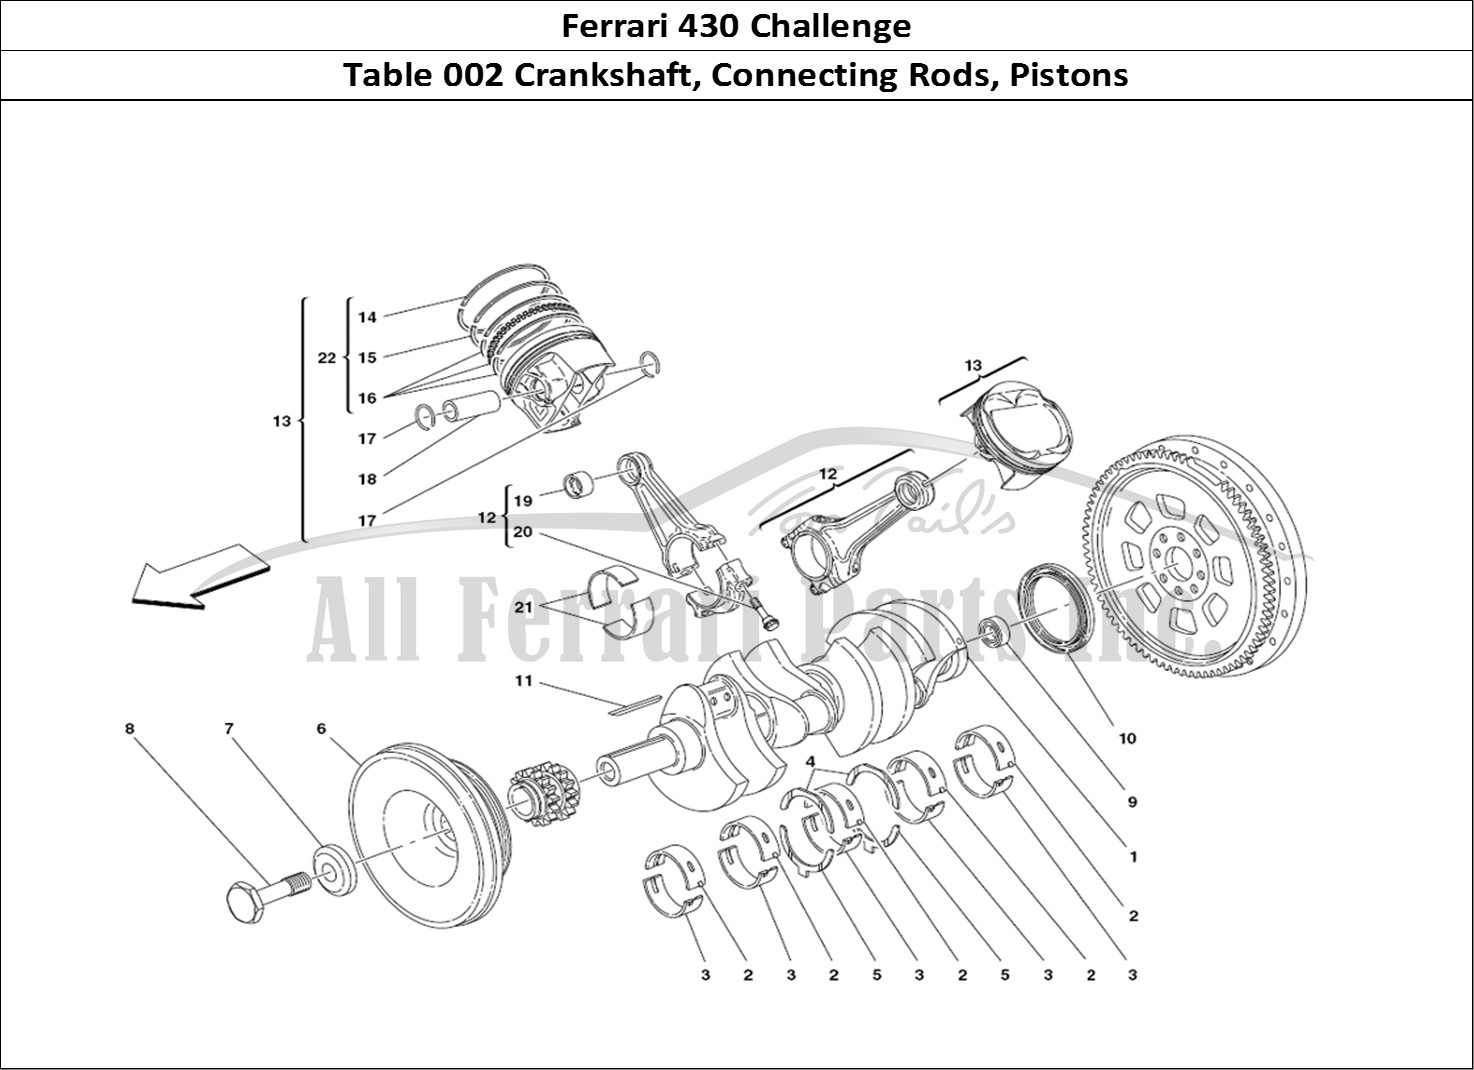 Ferrari Parts Ferrari 430 Challenge (2006) Page 002 Crankshaft, Conrods And P